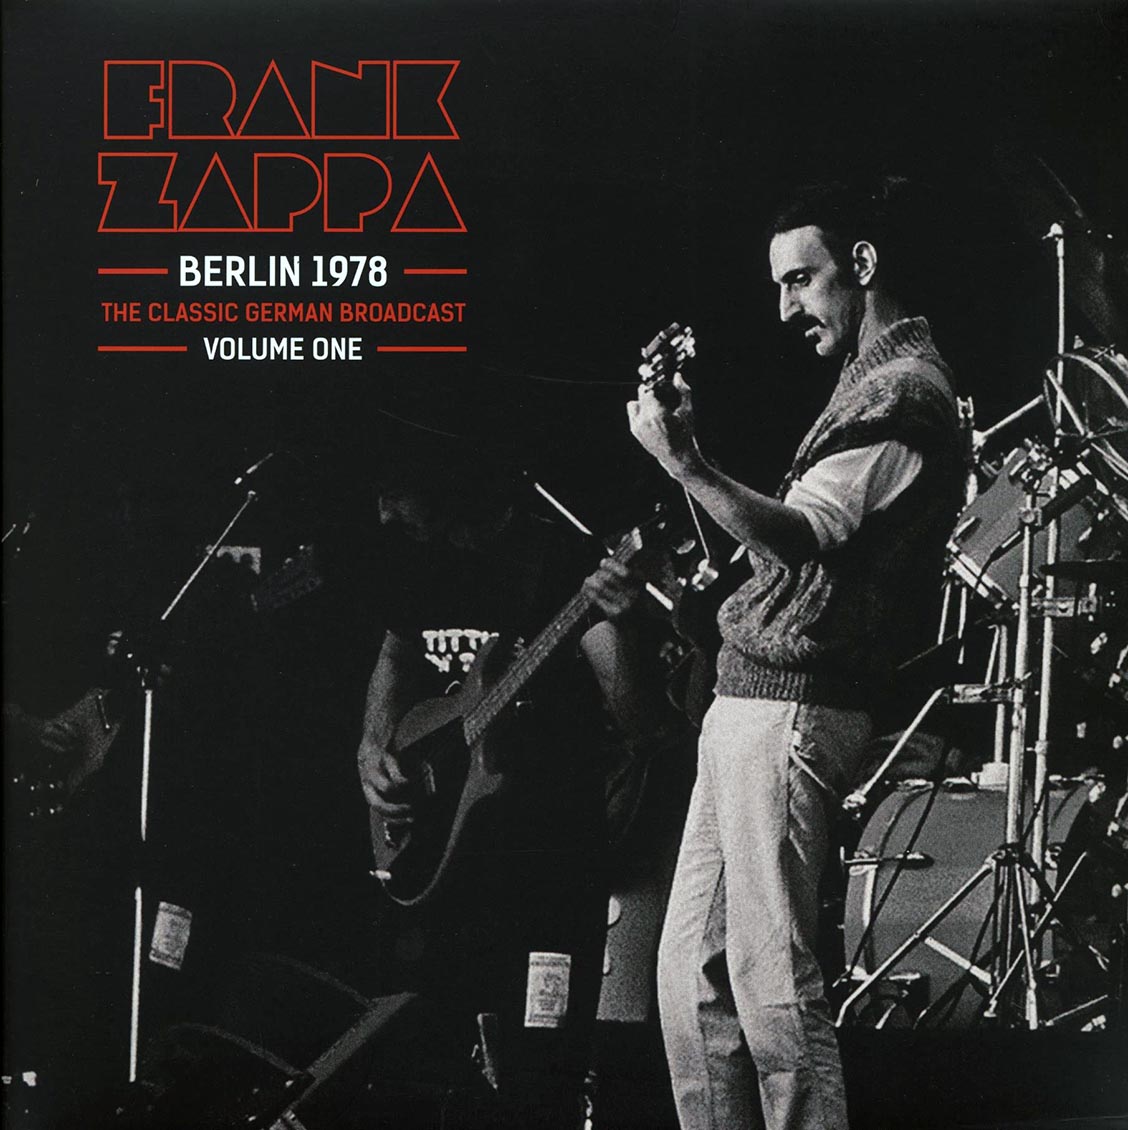 Frank Zappa - Berlin 1978 Volume 1: The Classic German Broadcast